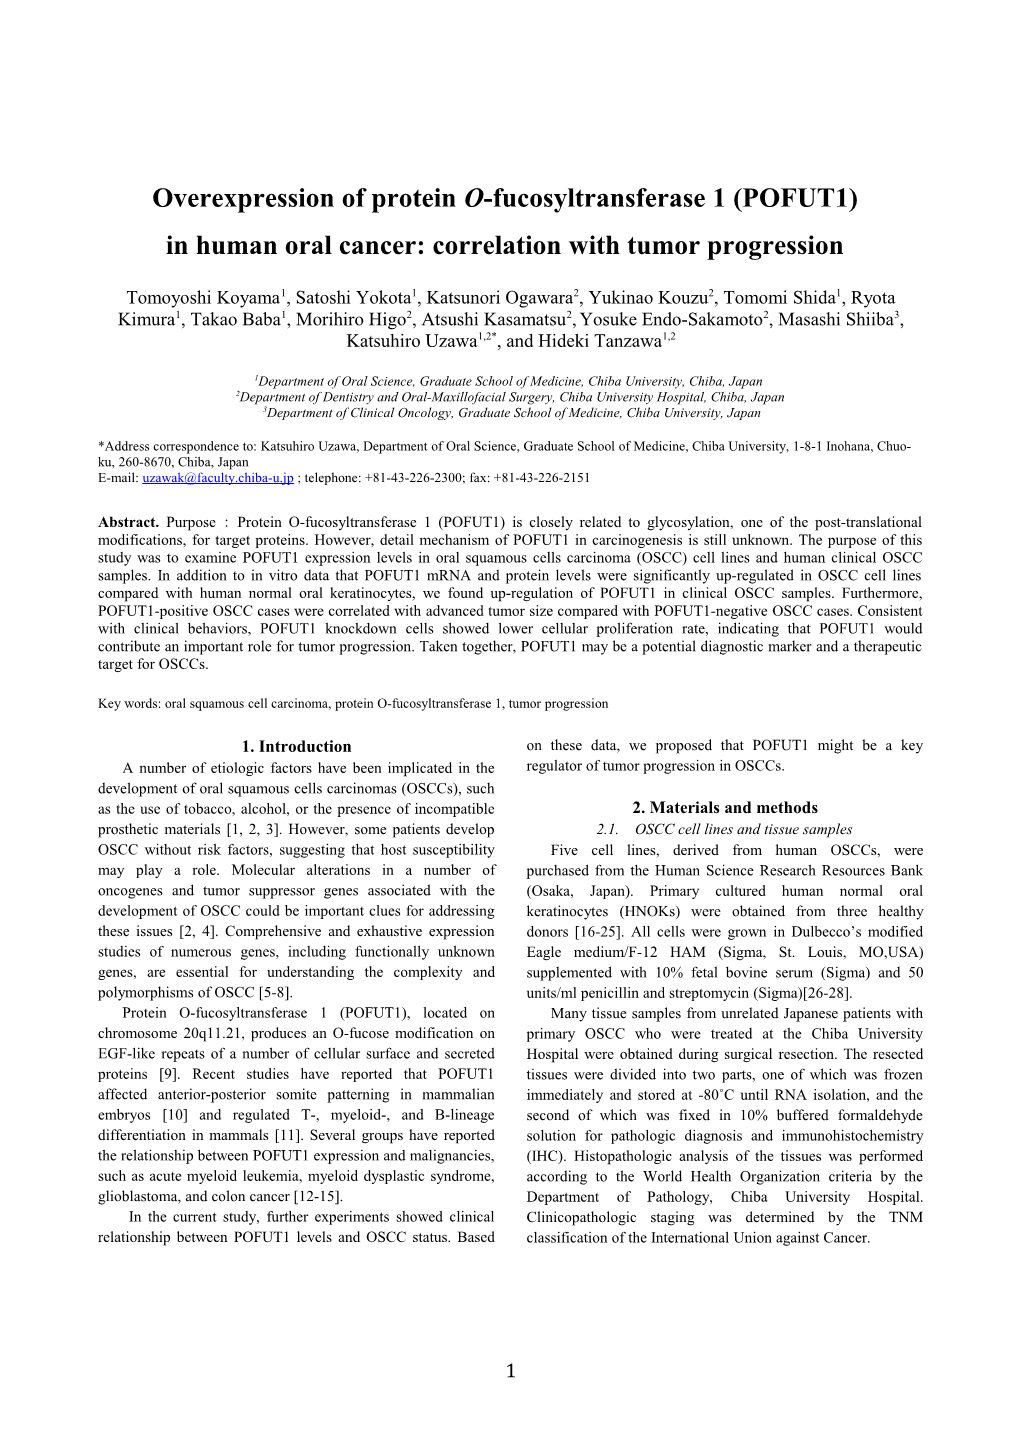 Overexpression of Protein O-Fucosyltransferase 1 (POFUT1) in Human Oral Cancer: Correlation